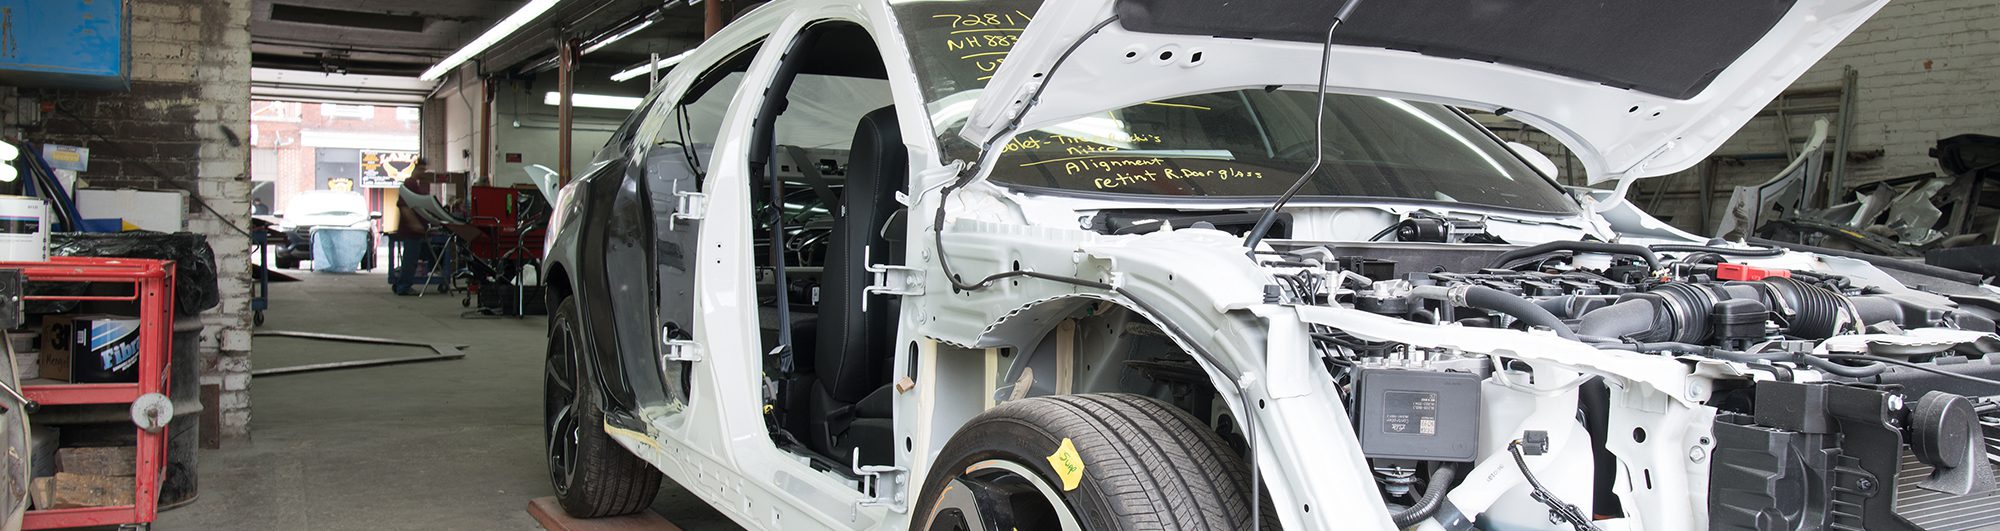 Collision Repair at Mengel-DaFonte Auto Body Inc in Holyoke, MA.